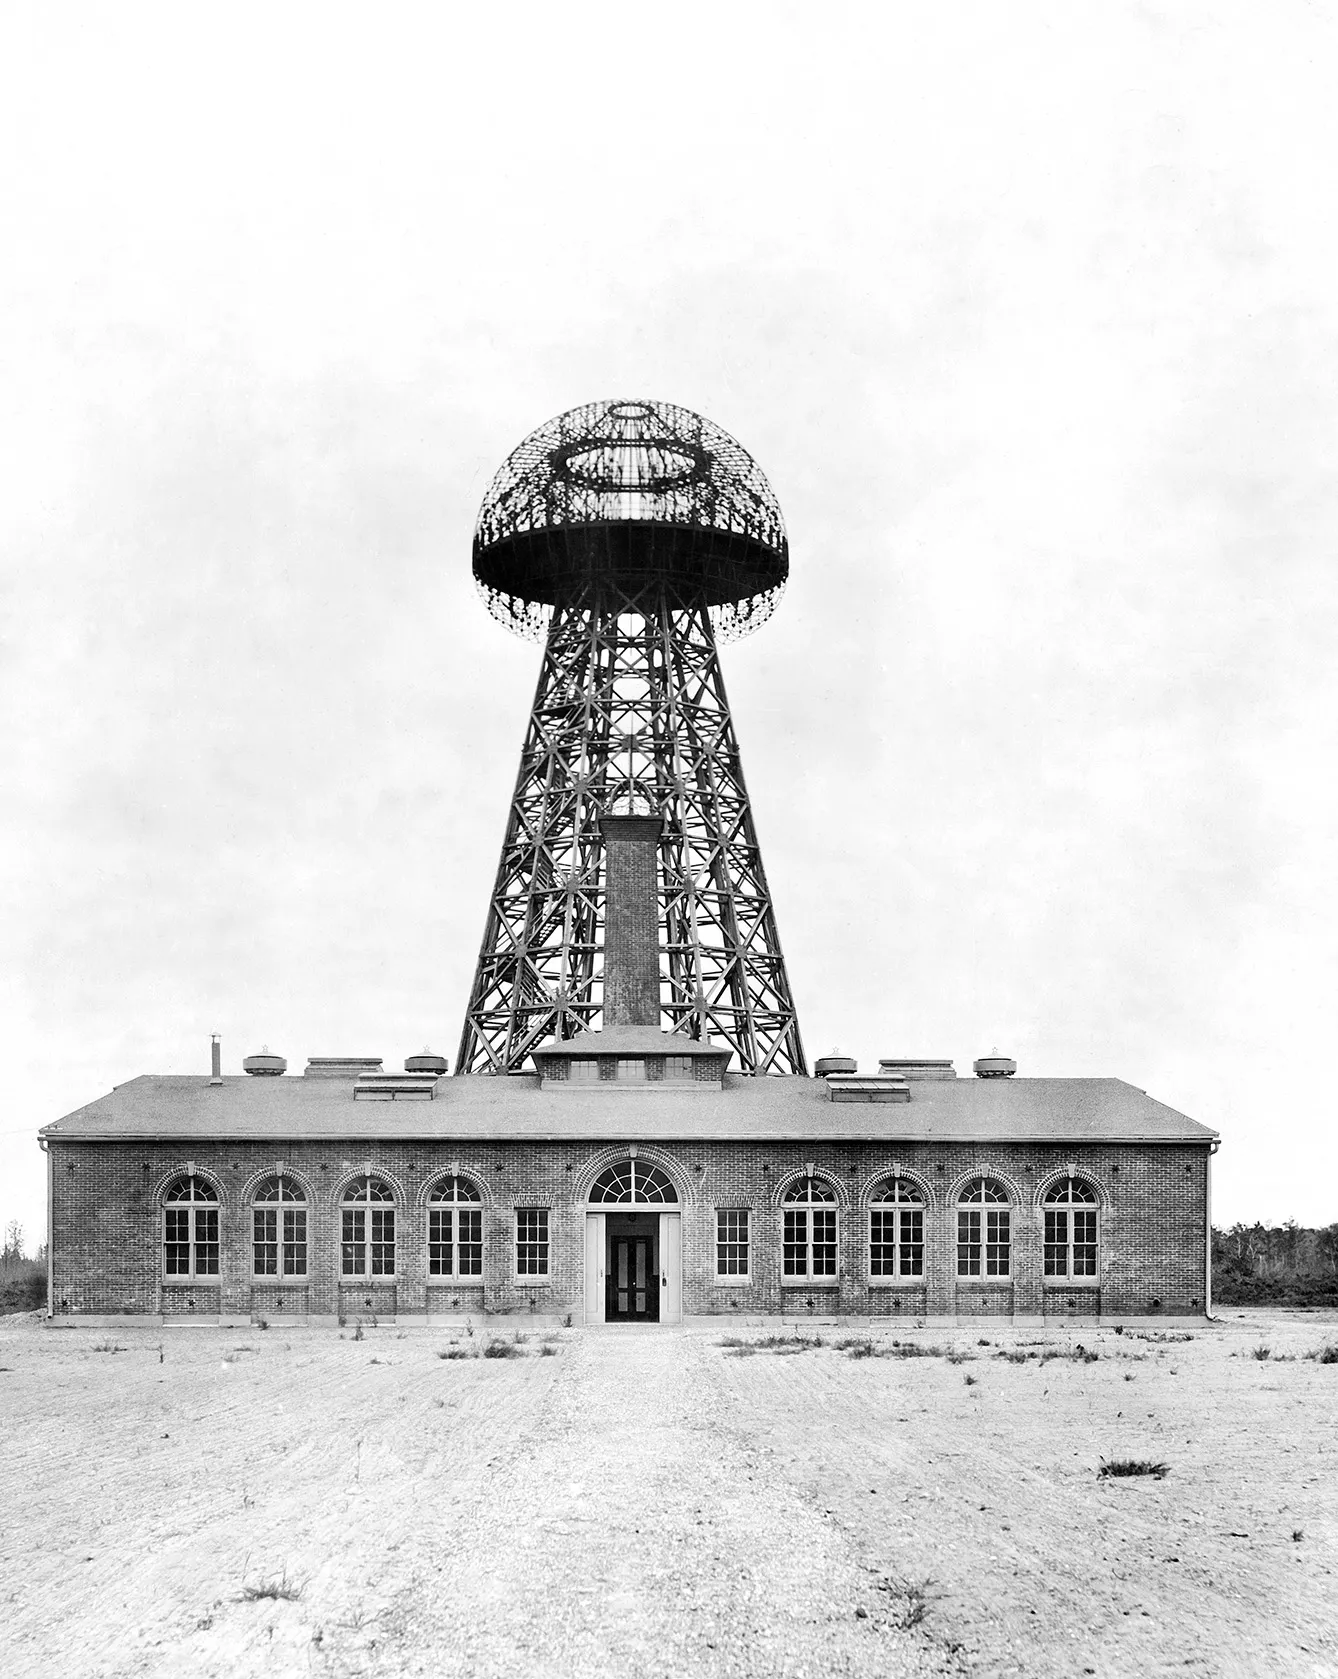 Power tower of Nicola Tesla in Wardenclyffe